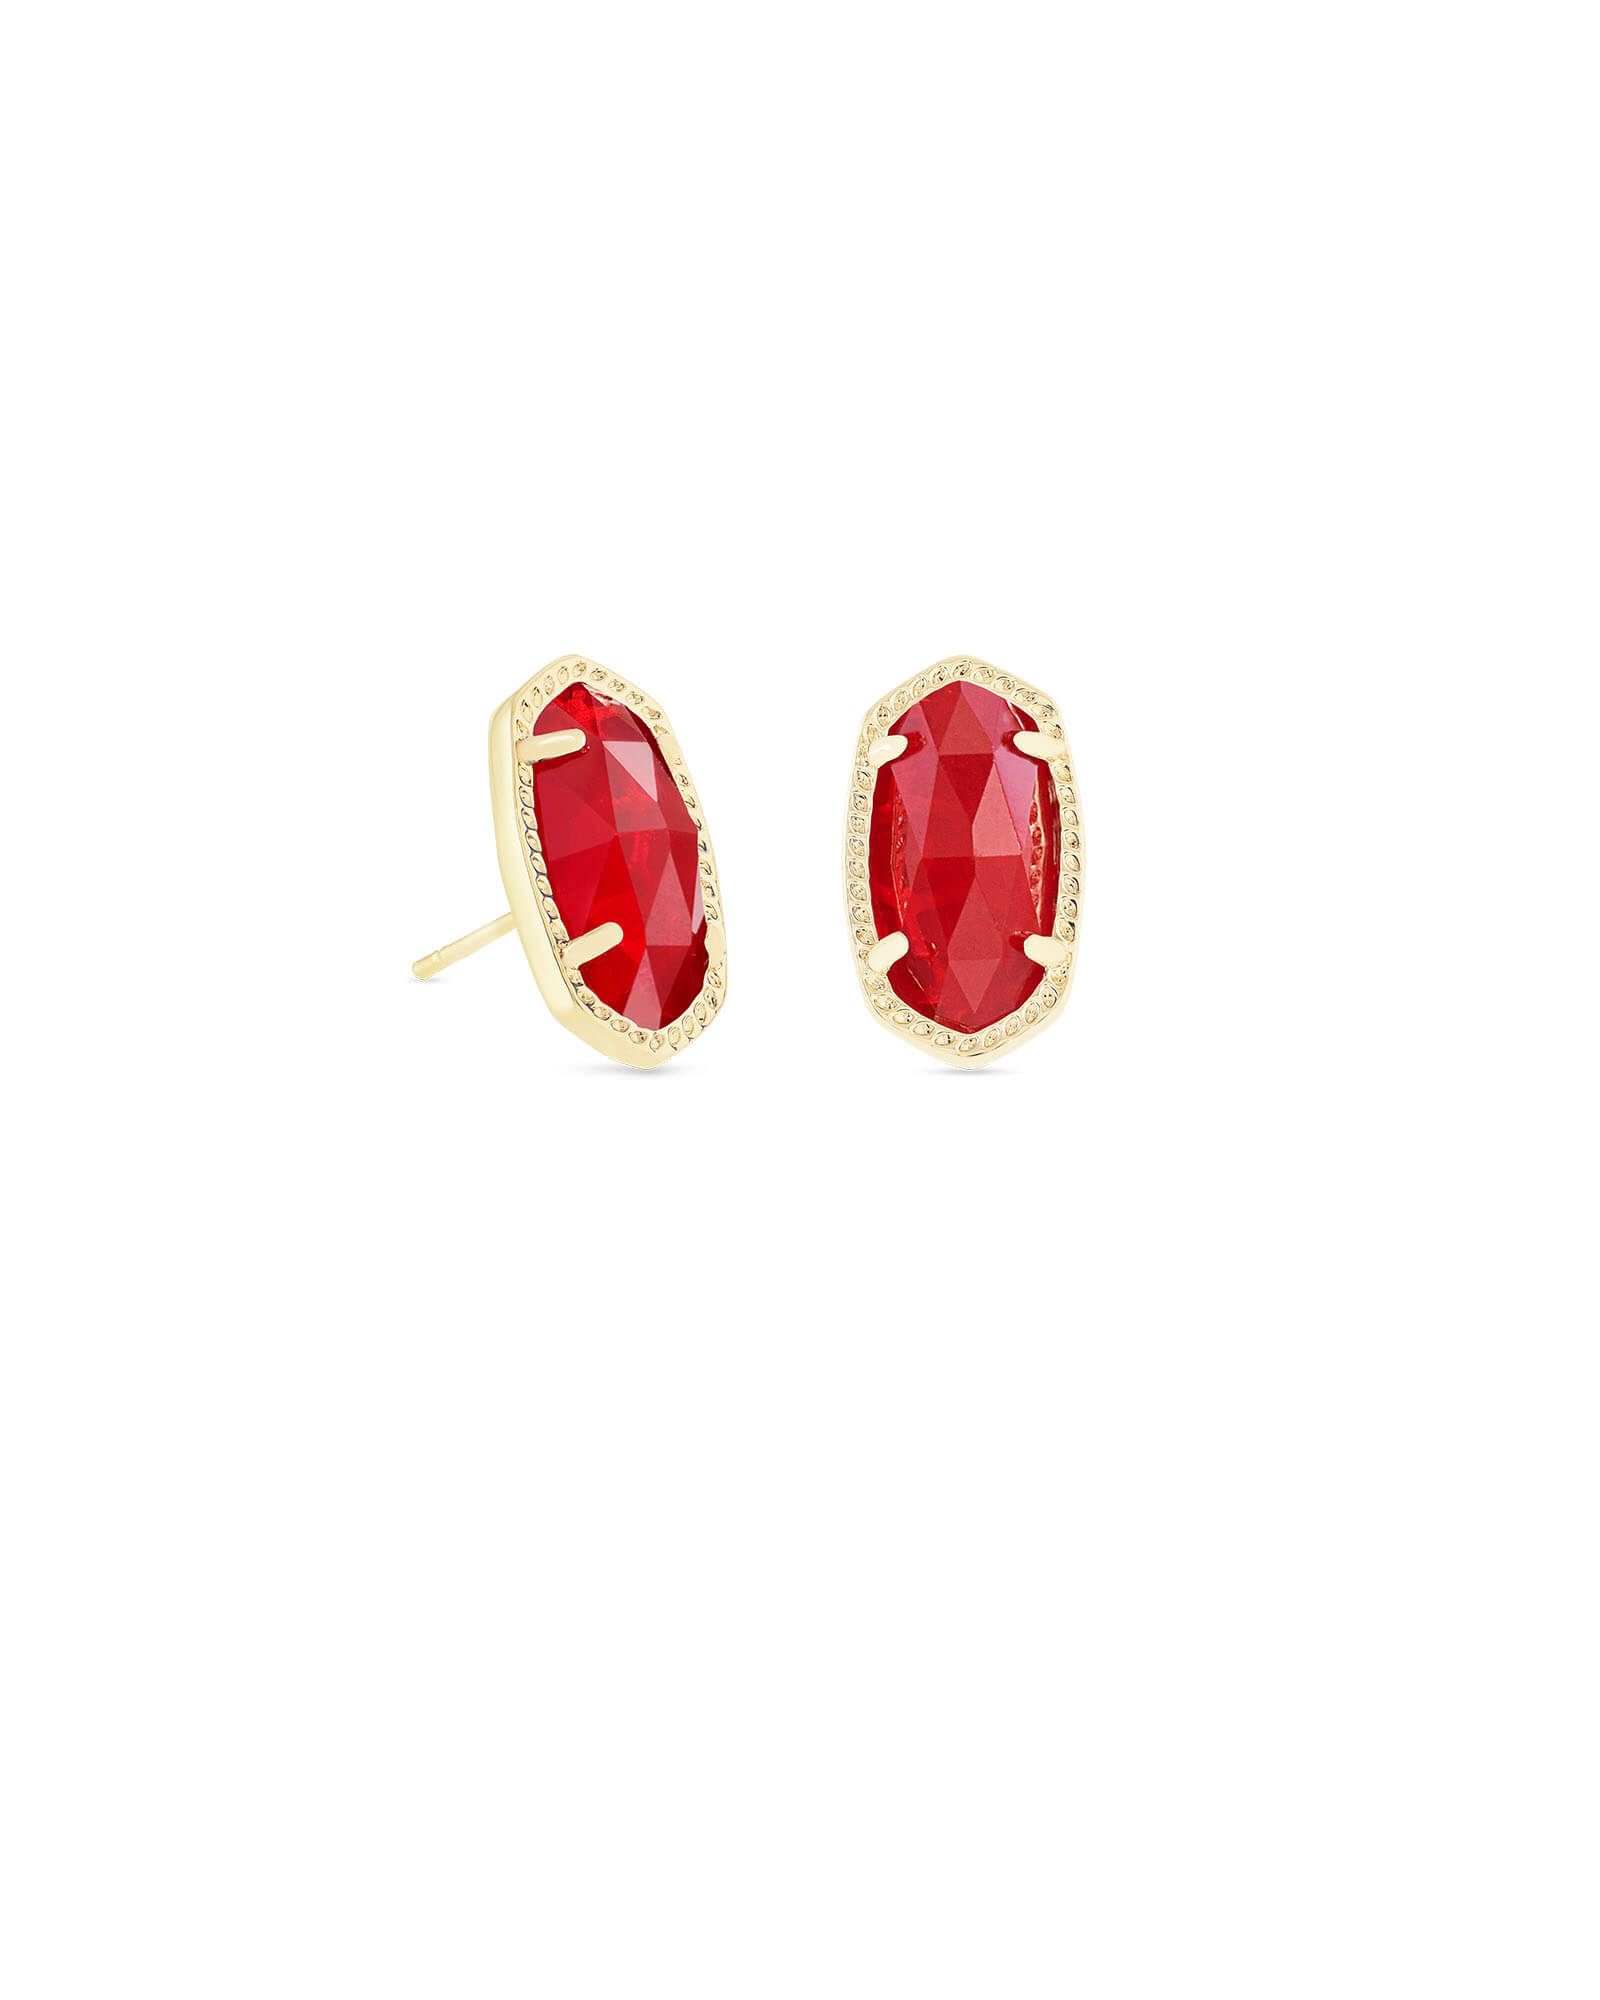 Ellie Gold Stud Earrings in Ruby Red | Kendra Scott